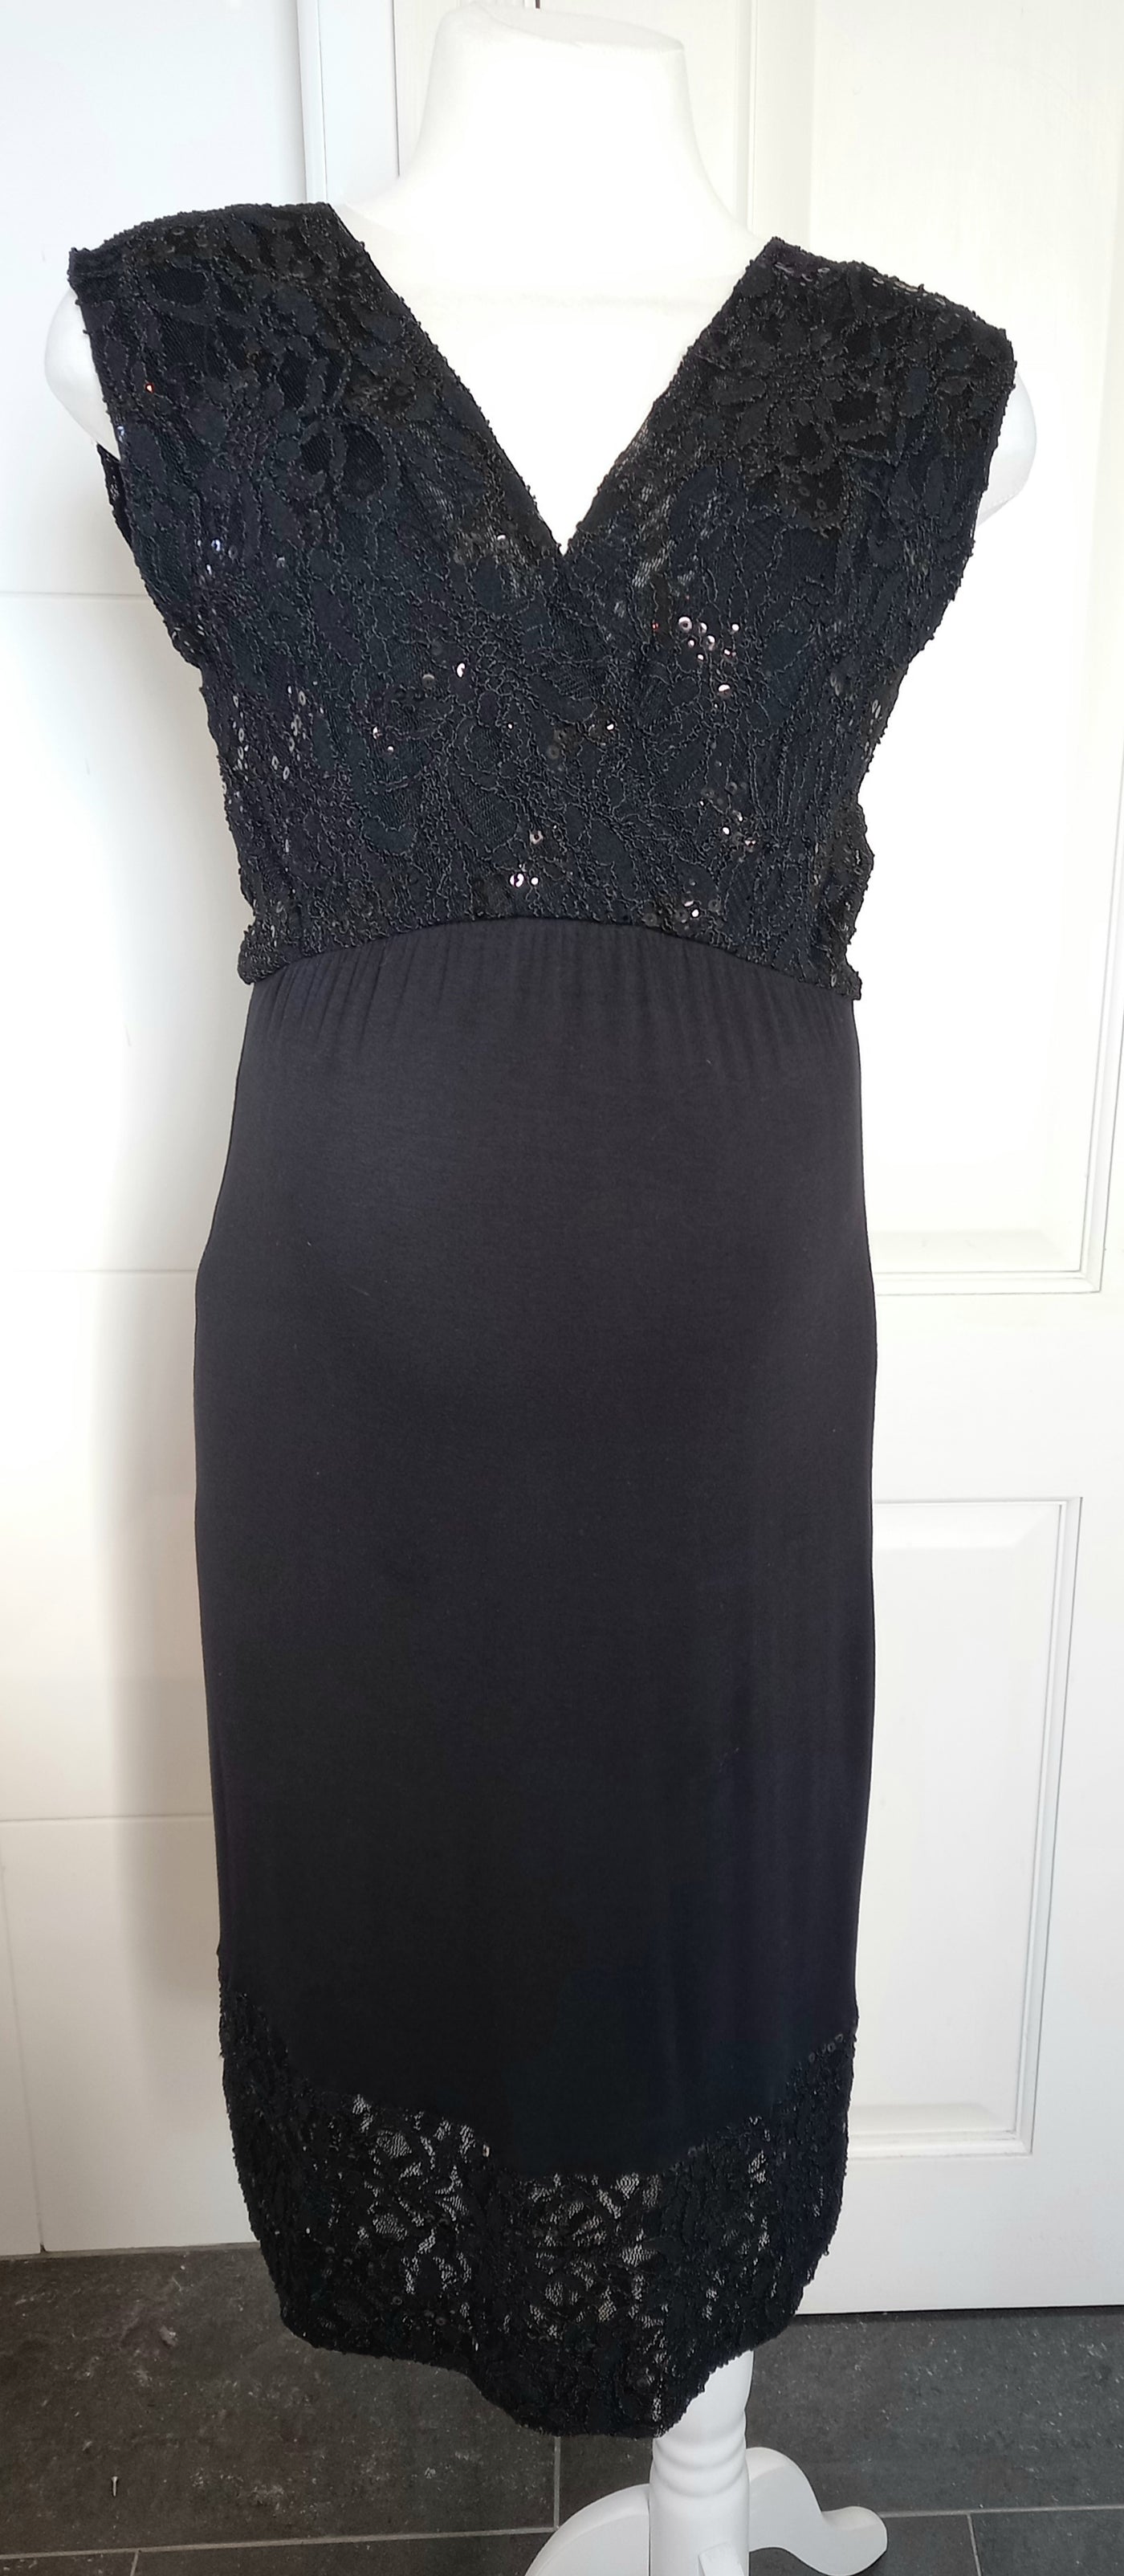 Tiffany Rose Sequin Black Dress - Size 3 (UK 12/14)